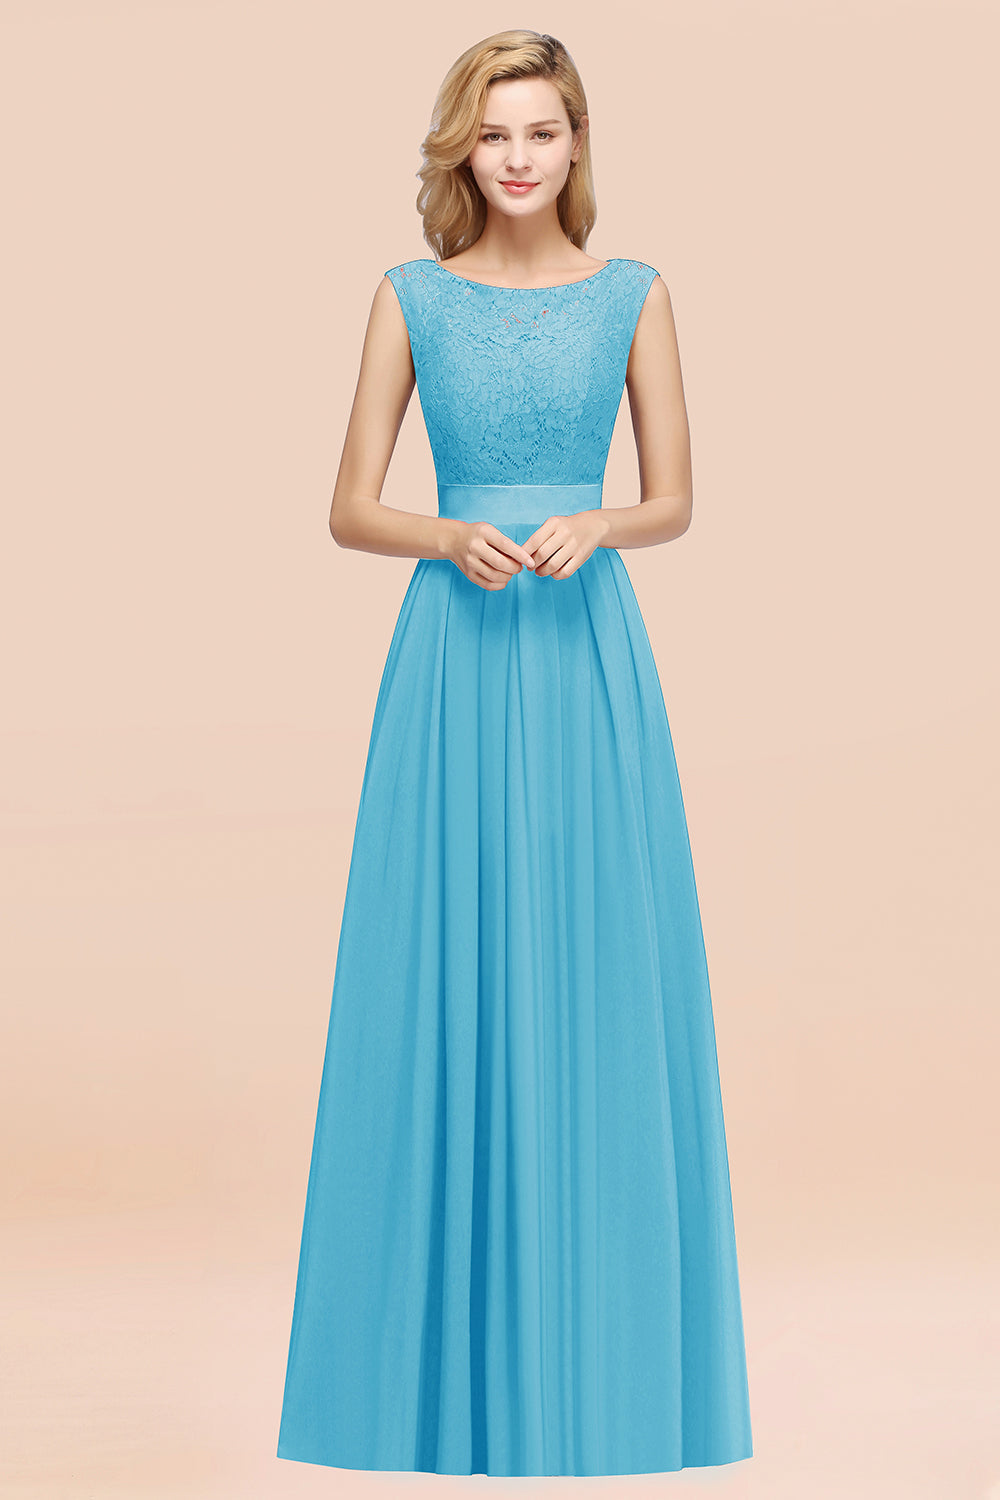 Vintage Sleeveless Lace Bridesmaid Dresses Affordable Chiffon Wedding Party Dress Online-27dress